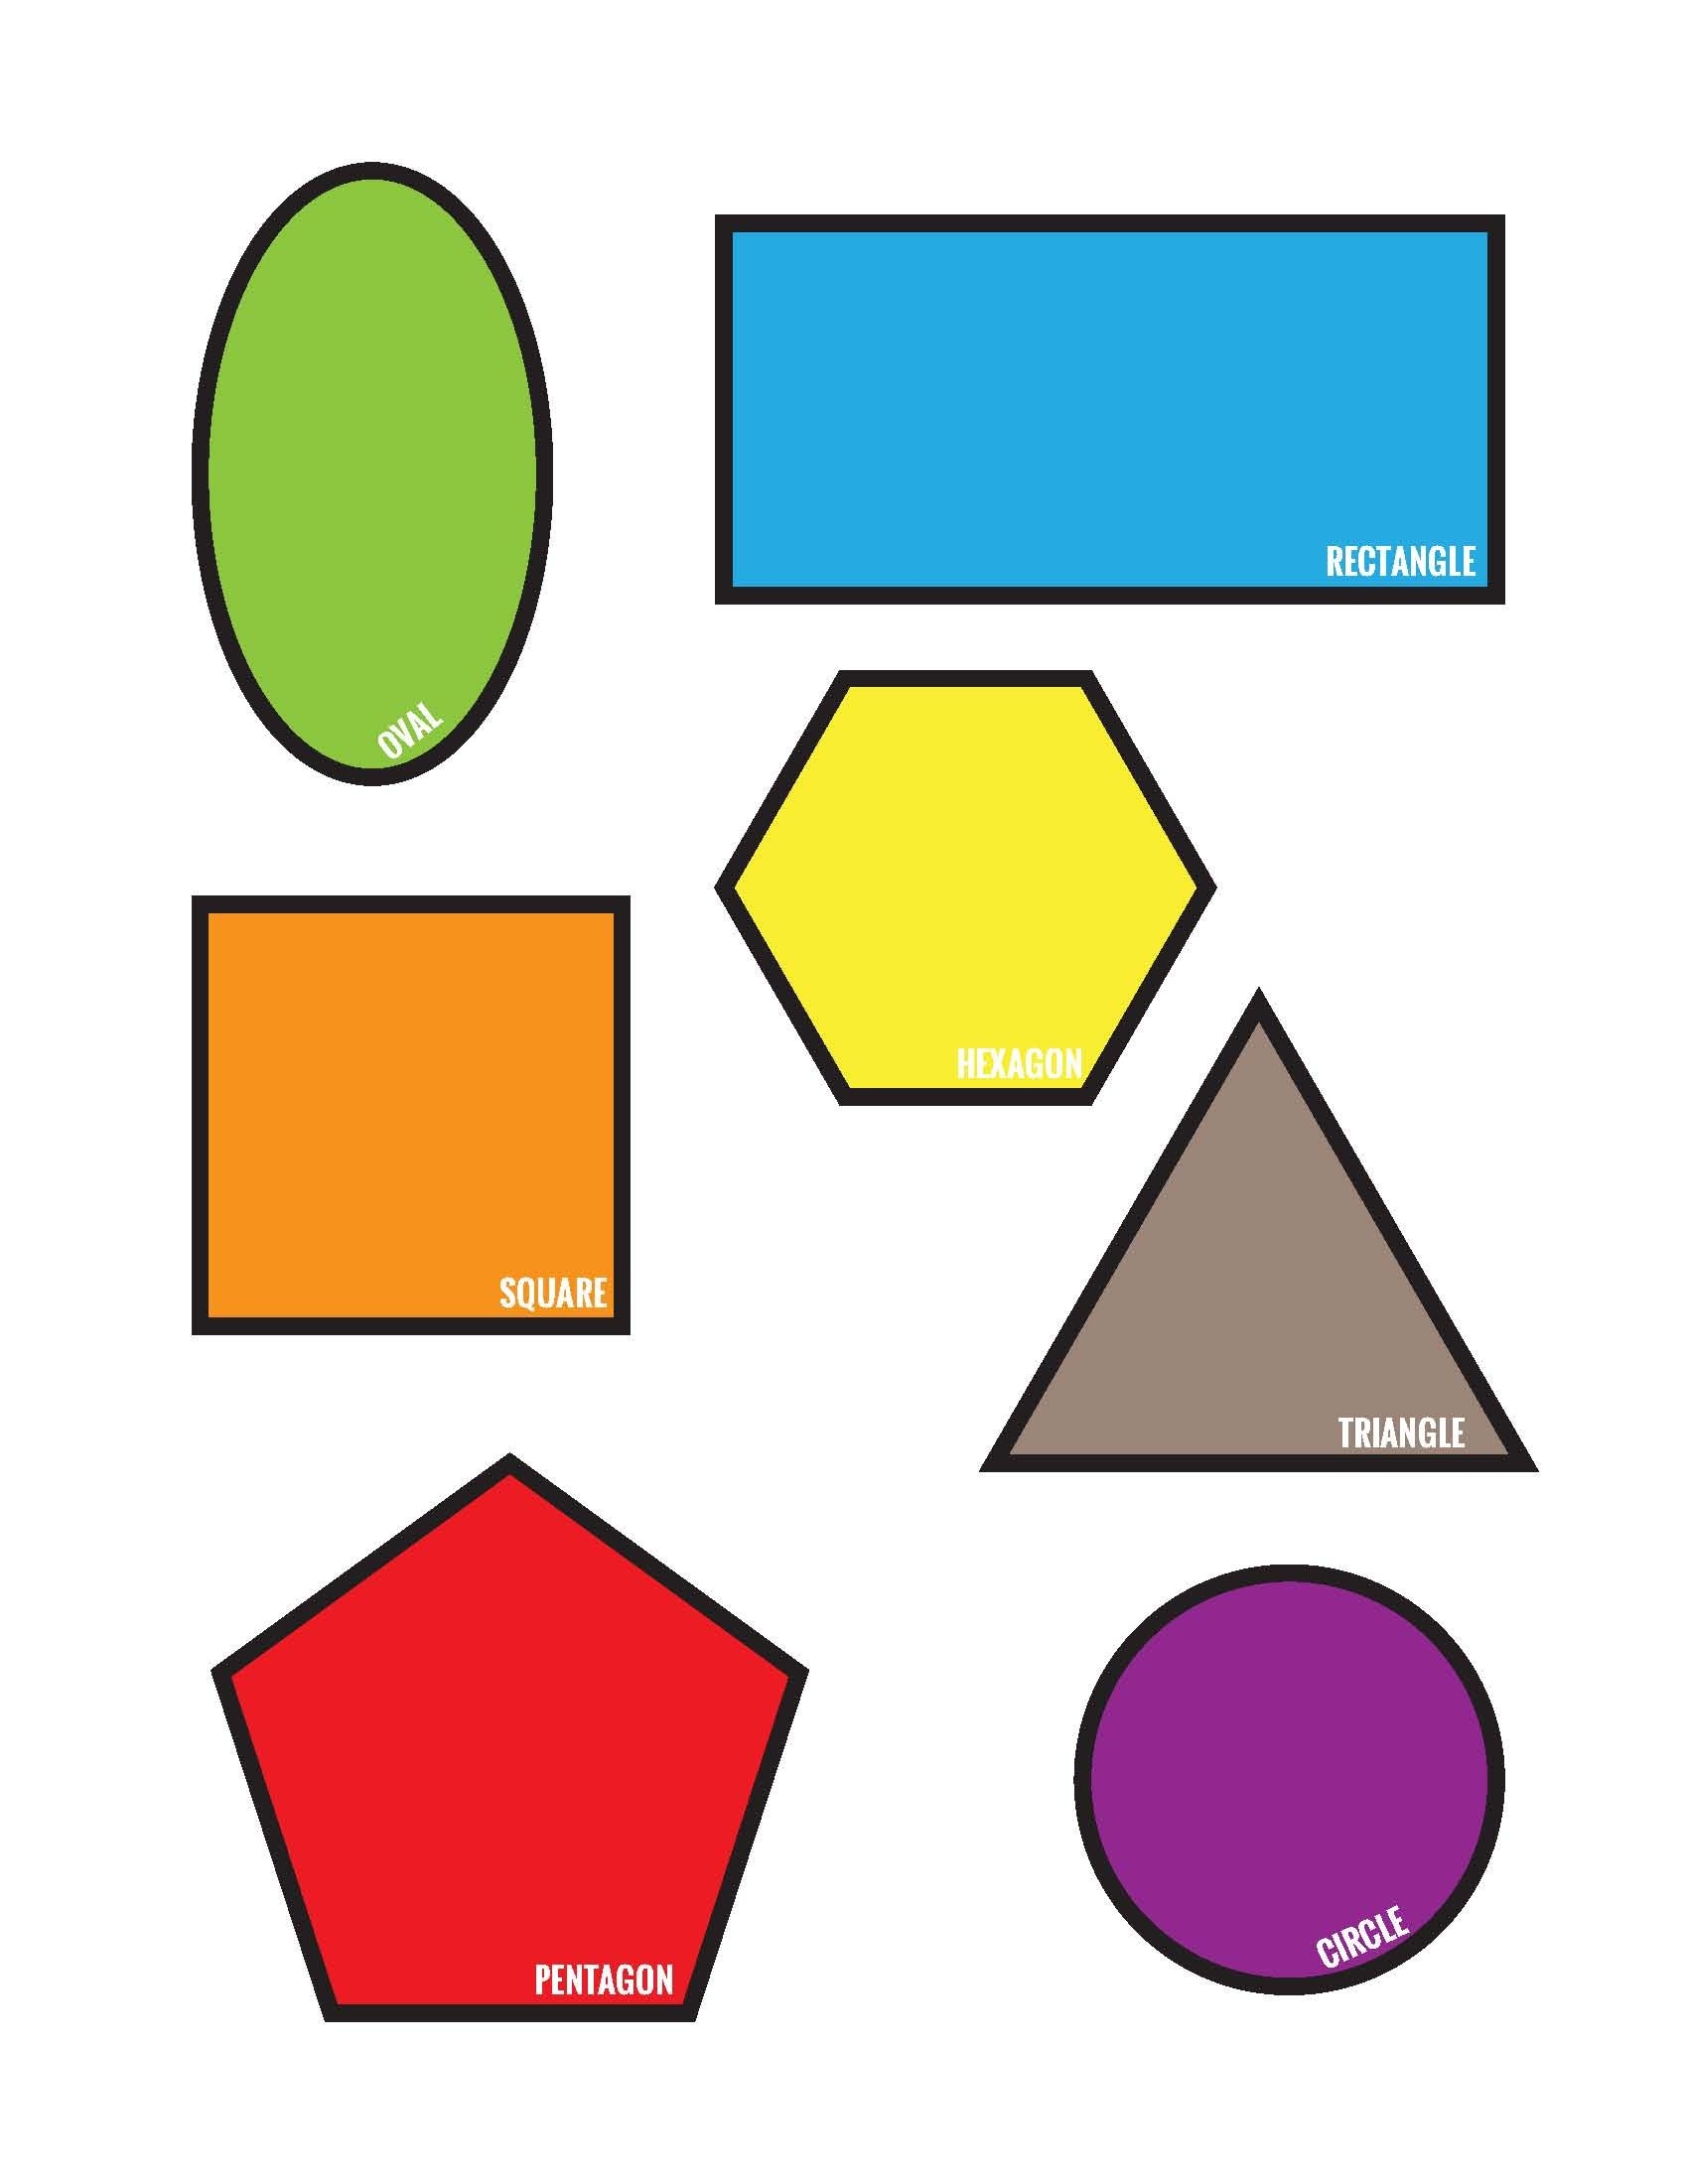 Freebies Colorful Shapes Matching File Folder Printable Game Free PDF Download Folder Games File Folder Games Folder Games For Toddlers